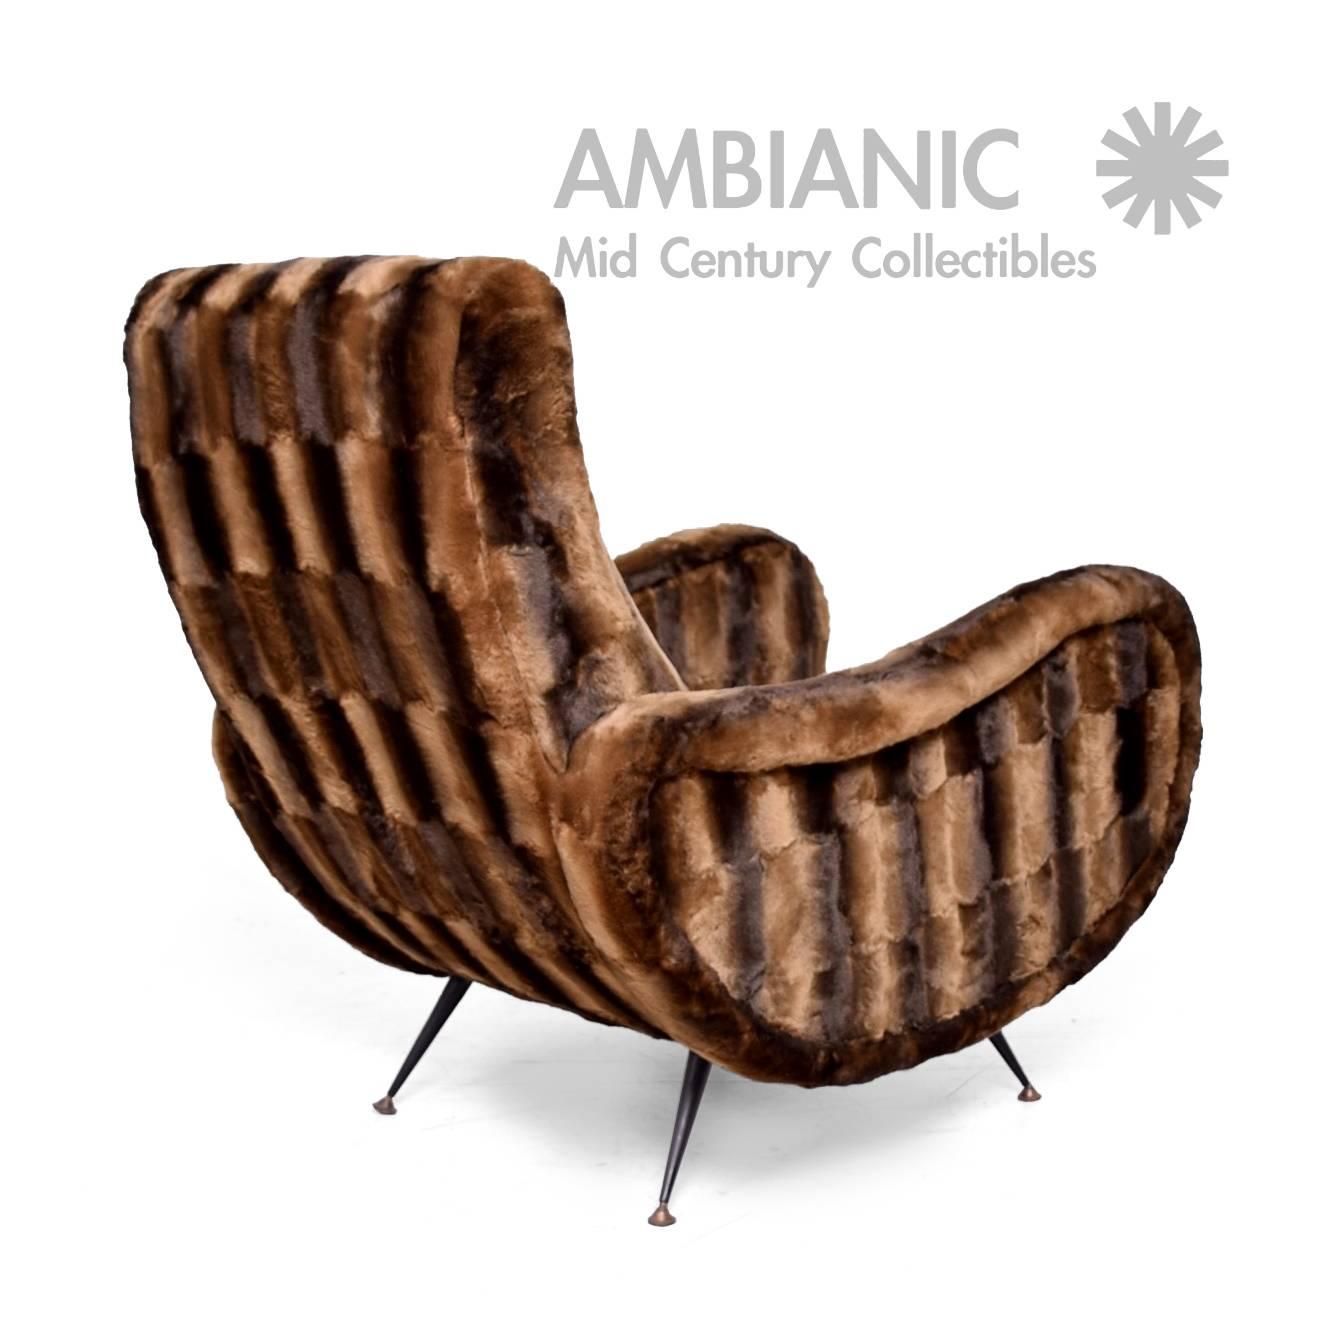 Mid-Century Modern Italian Chair, circa 1950s After Zanuso